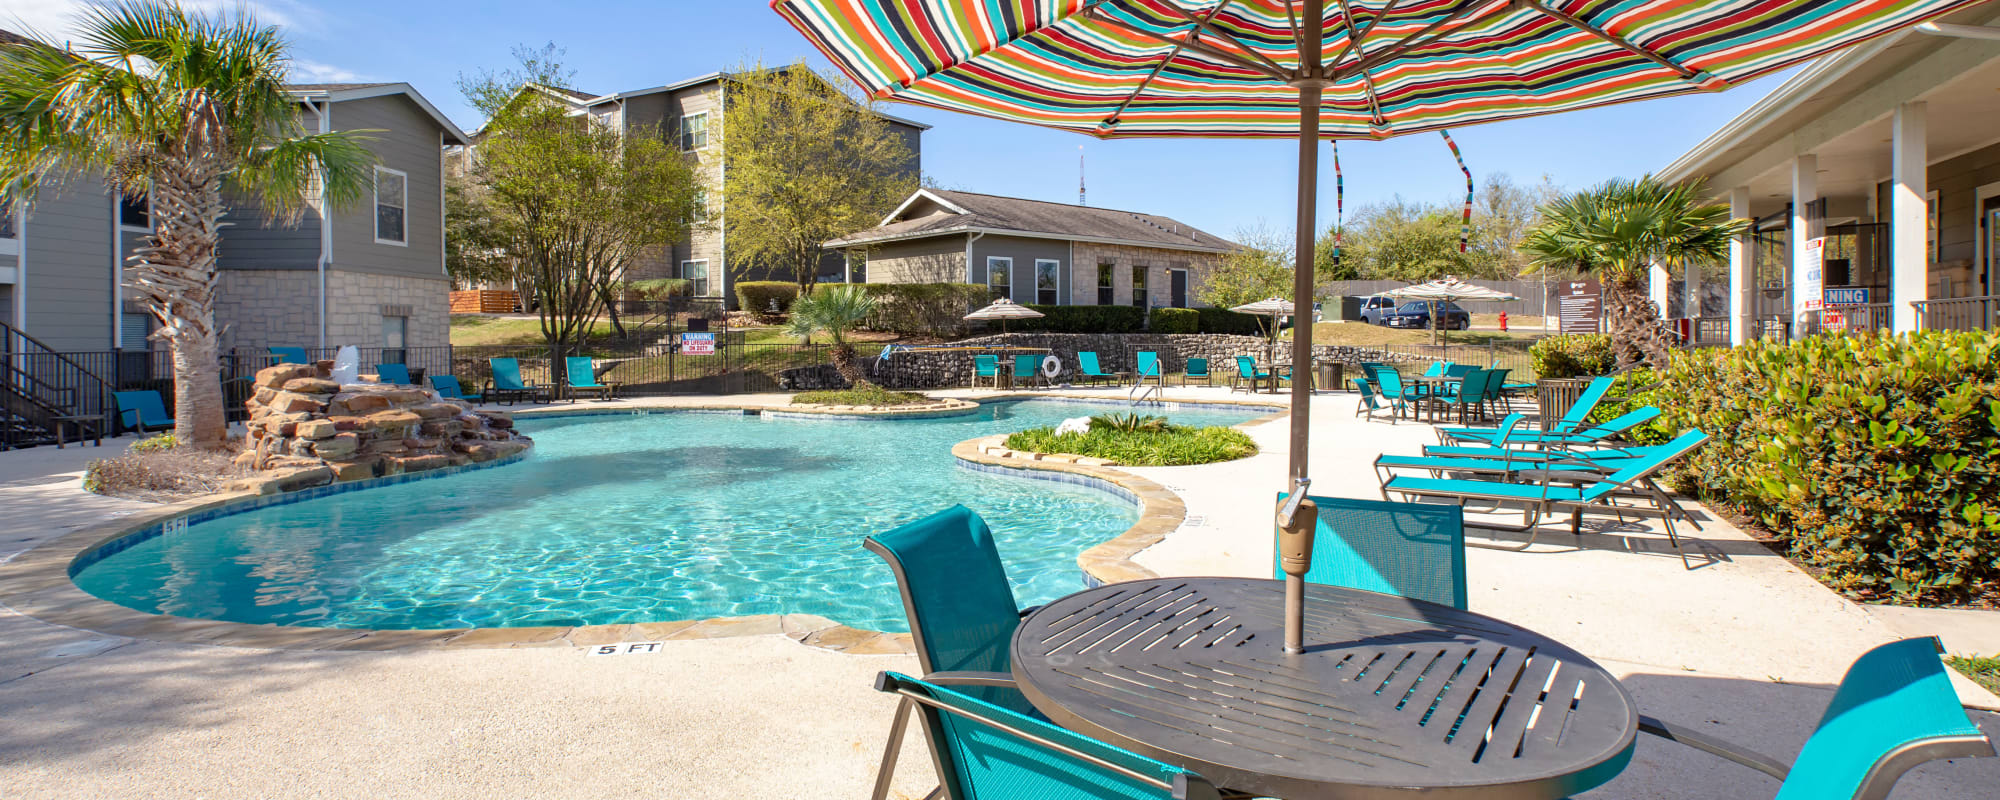 Beautiful Swimming Pool at Arya Grove in Universal City, Texas